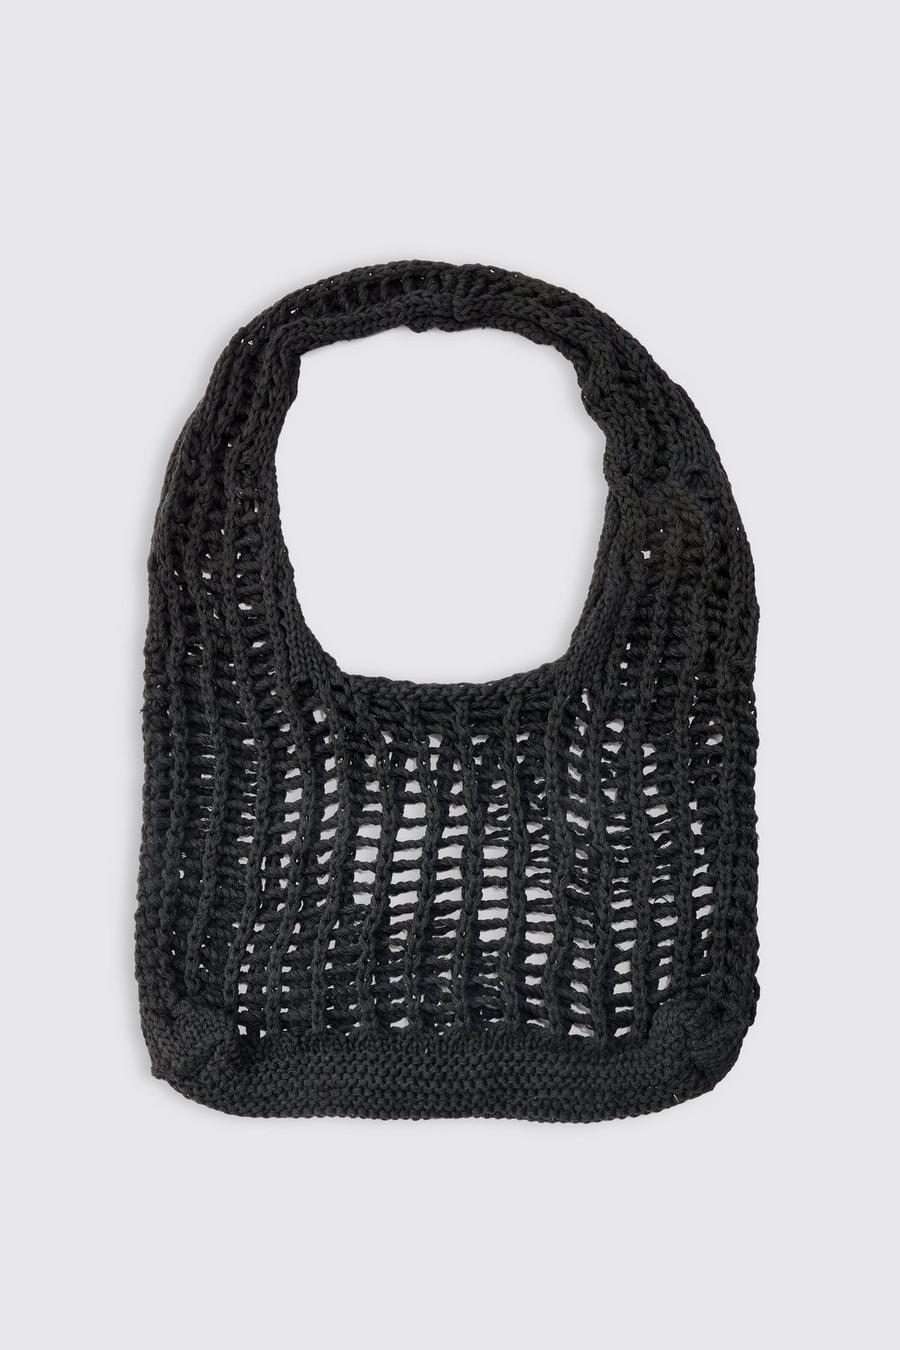 Black Open Knit Tote Bag